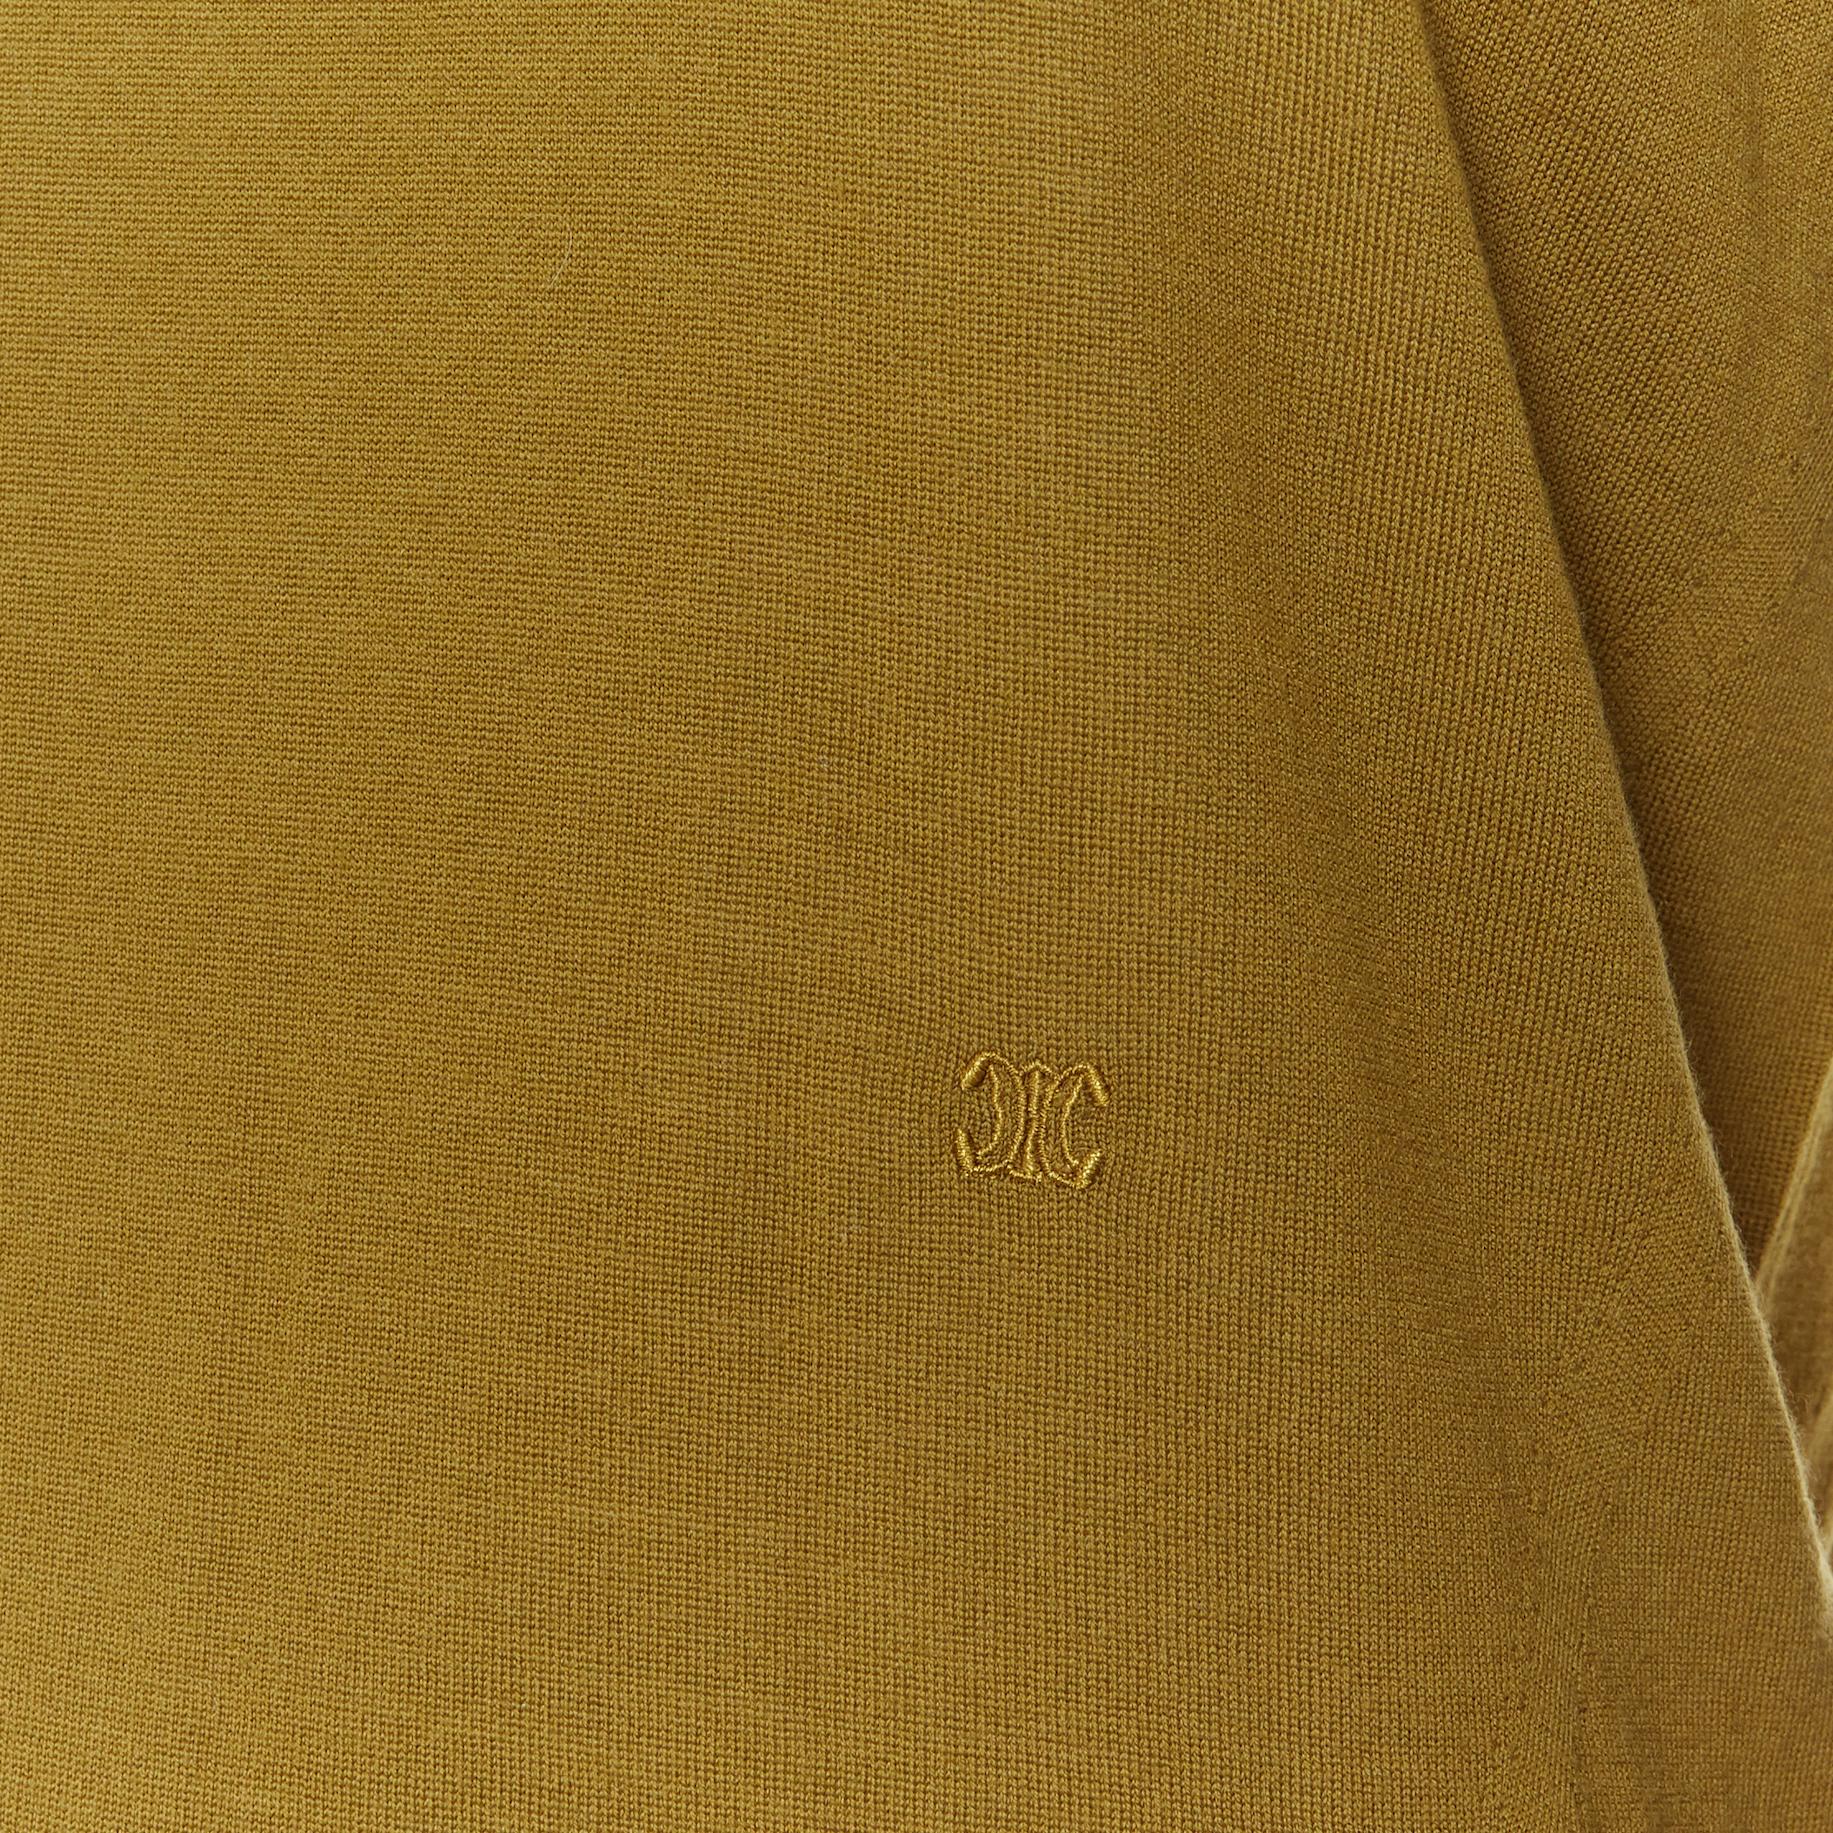 Women's CELINE PHOEBE PHILO 100% wool green vintage logo embroidery cuff sweater XS